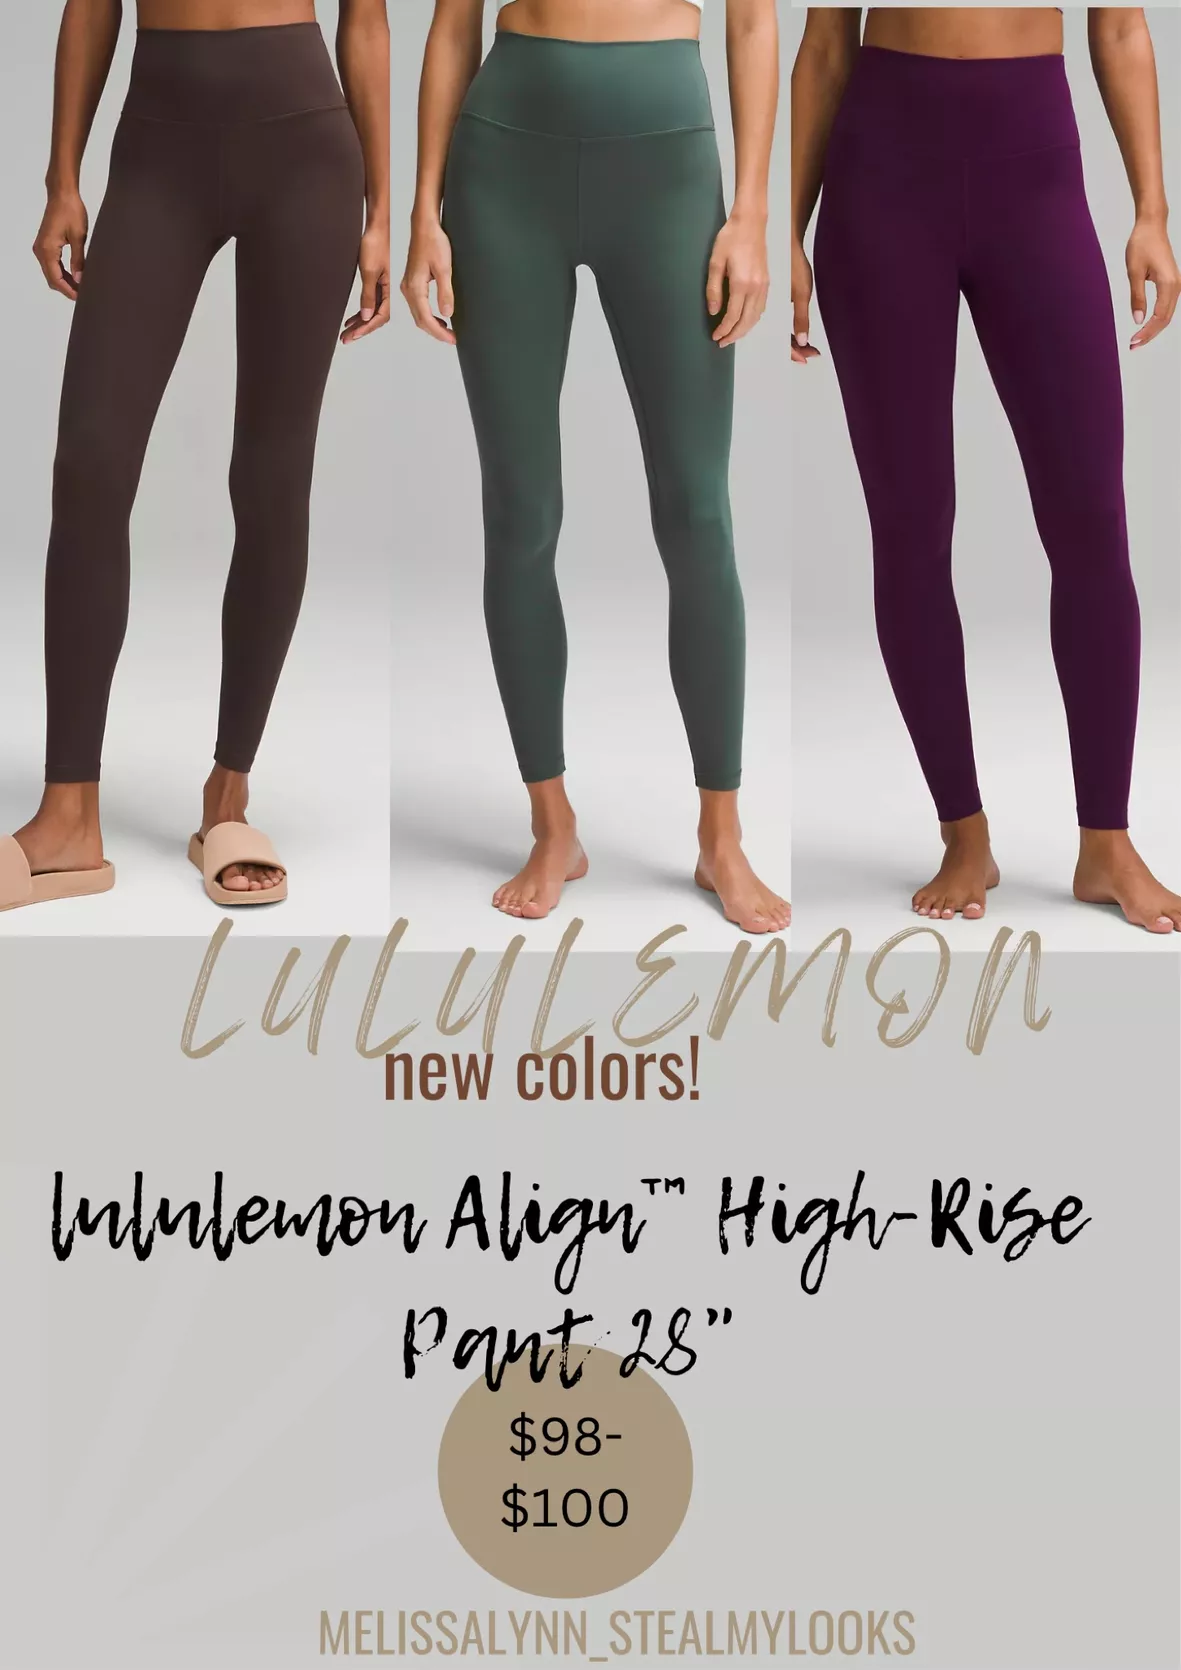 lululemon Align High-Rise Pant 28